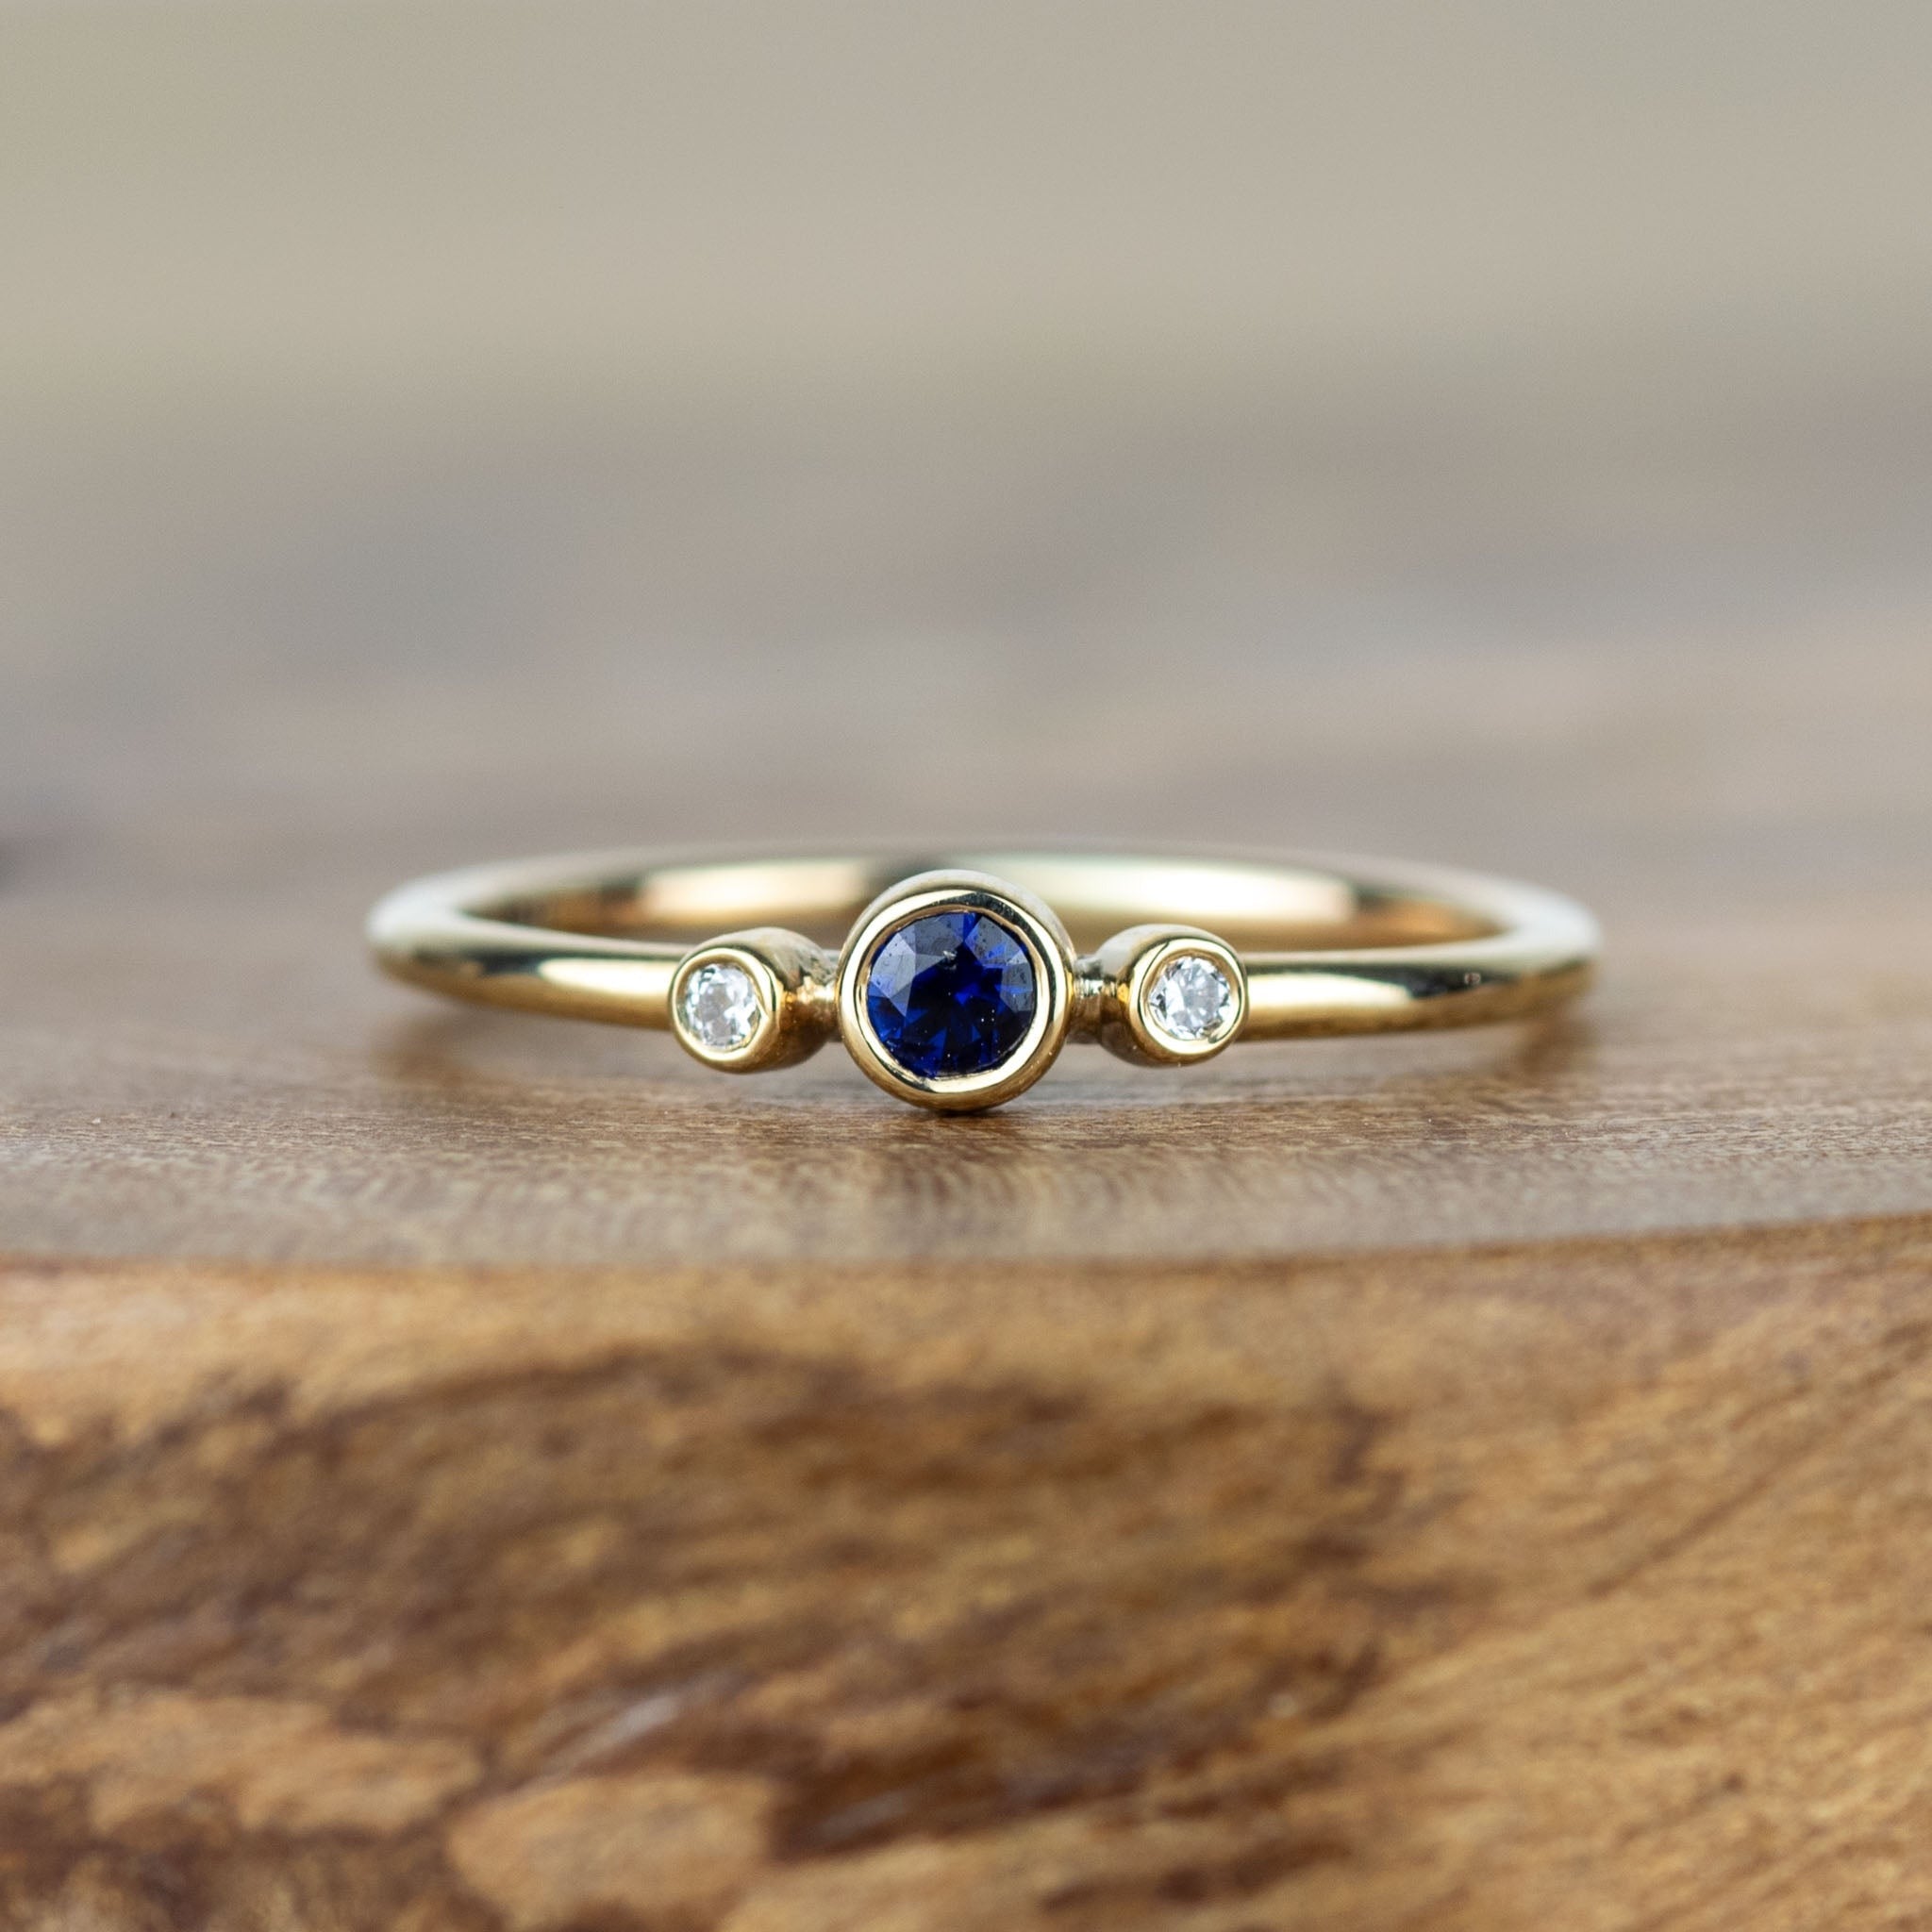 Engagement Rings | Alison Moore Jewellery – Alison Moore Designs